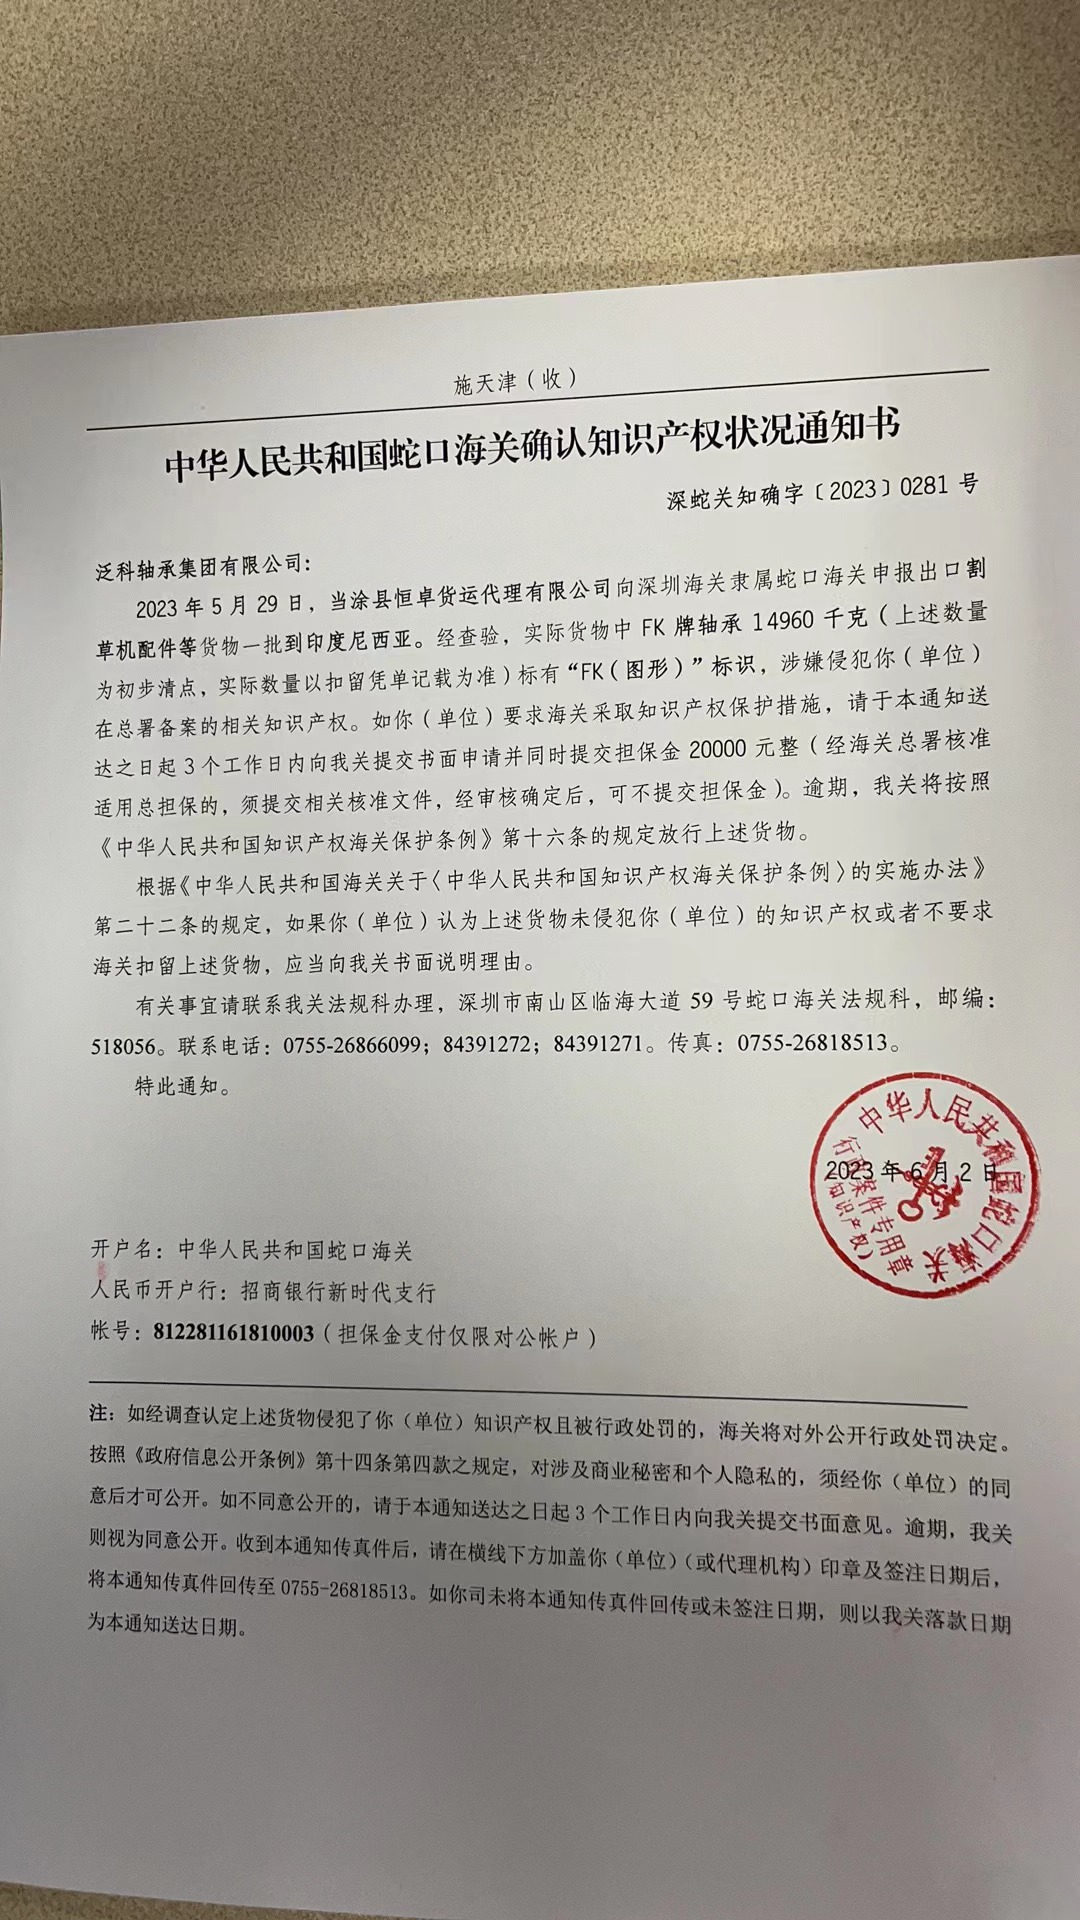 China Shekou customs seized counterfeit FK bearings